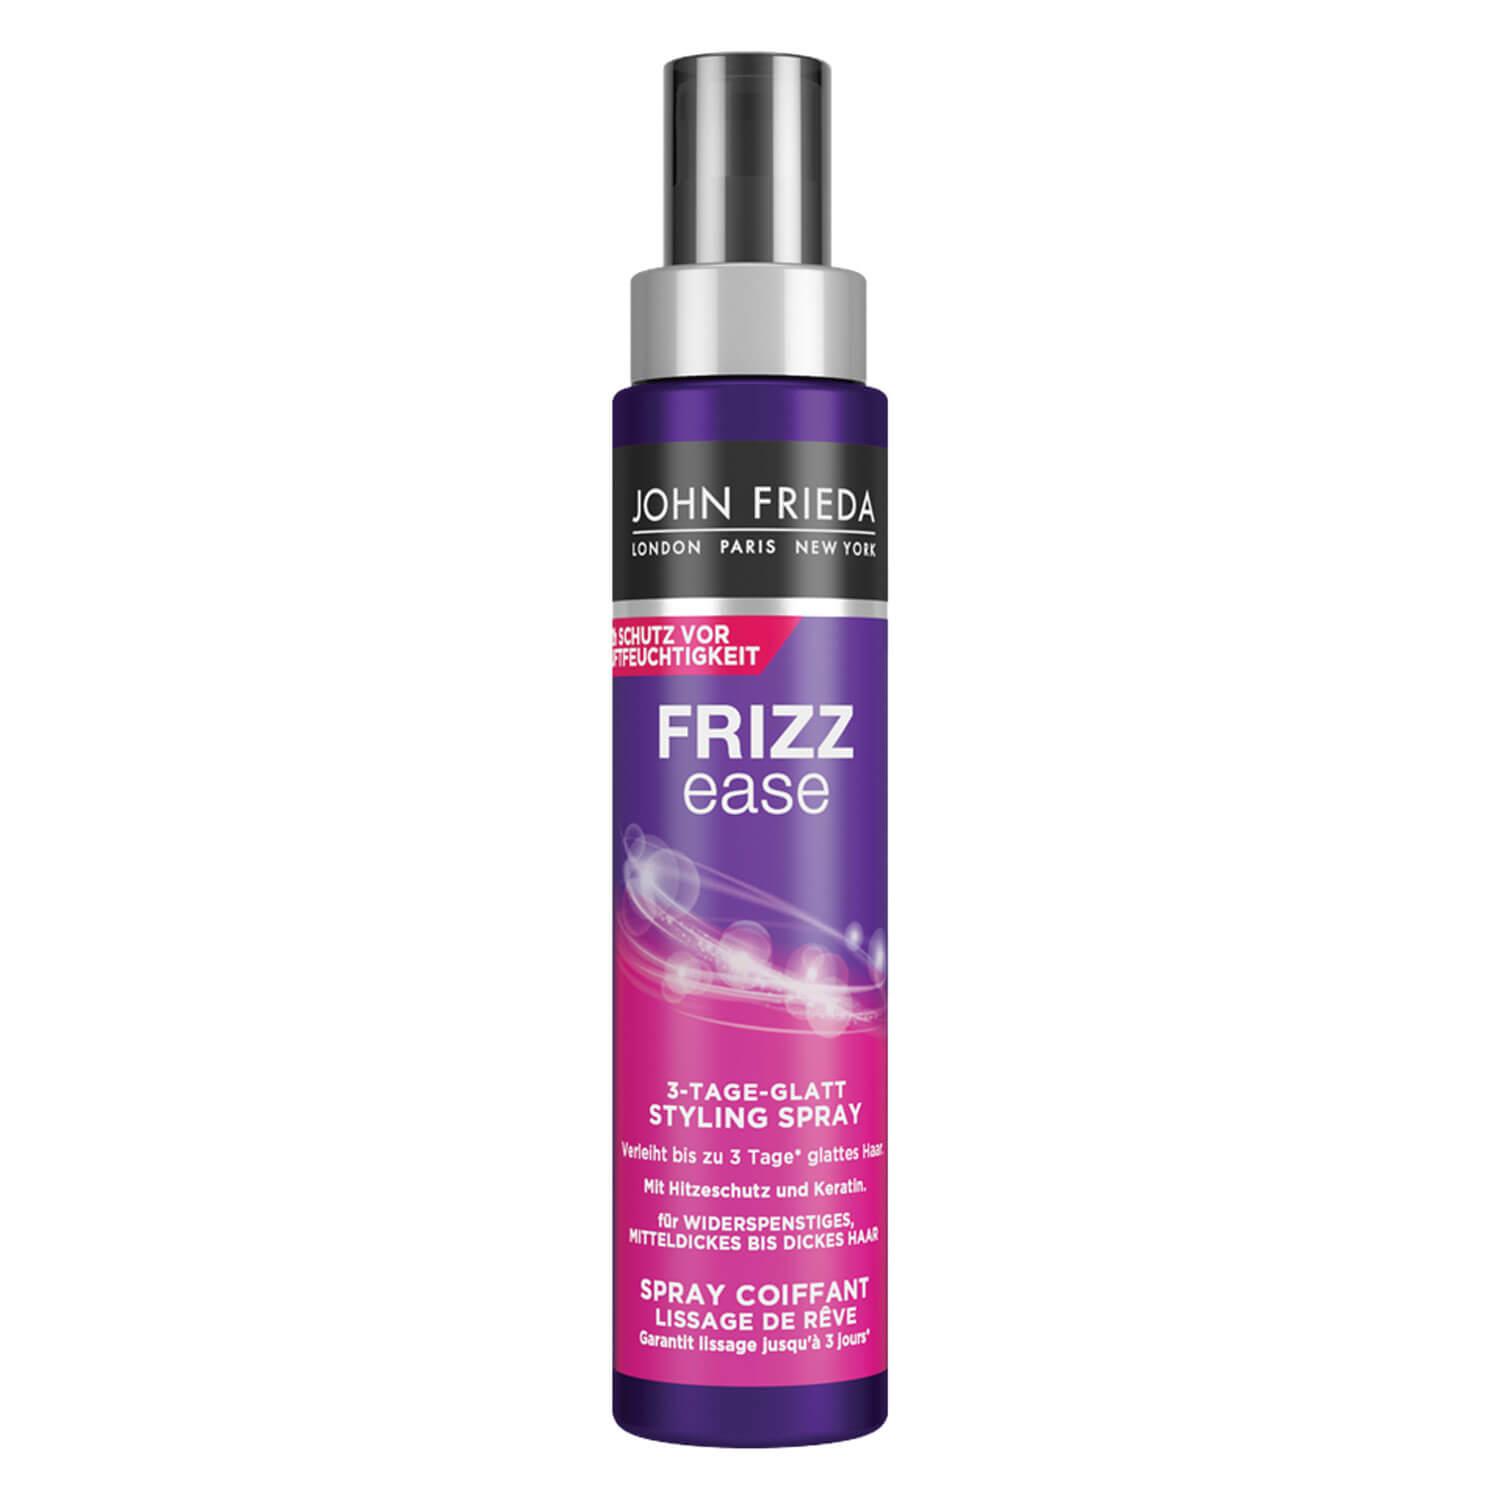 Frizz Ease - Traumglätte 3-Tage-Glatt Styling Spray